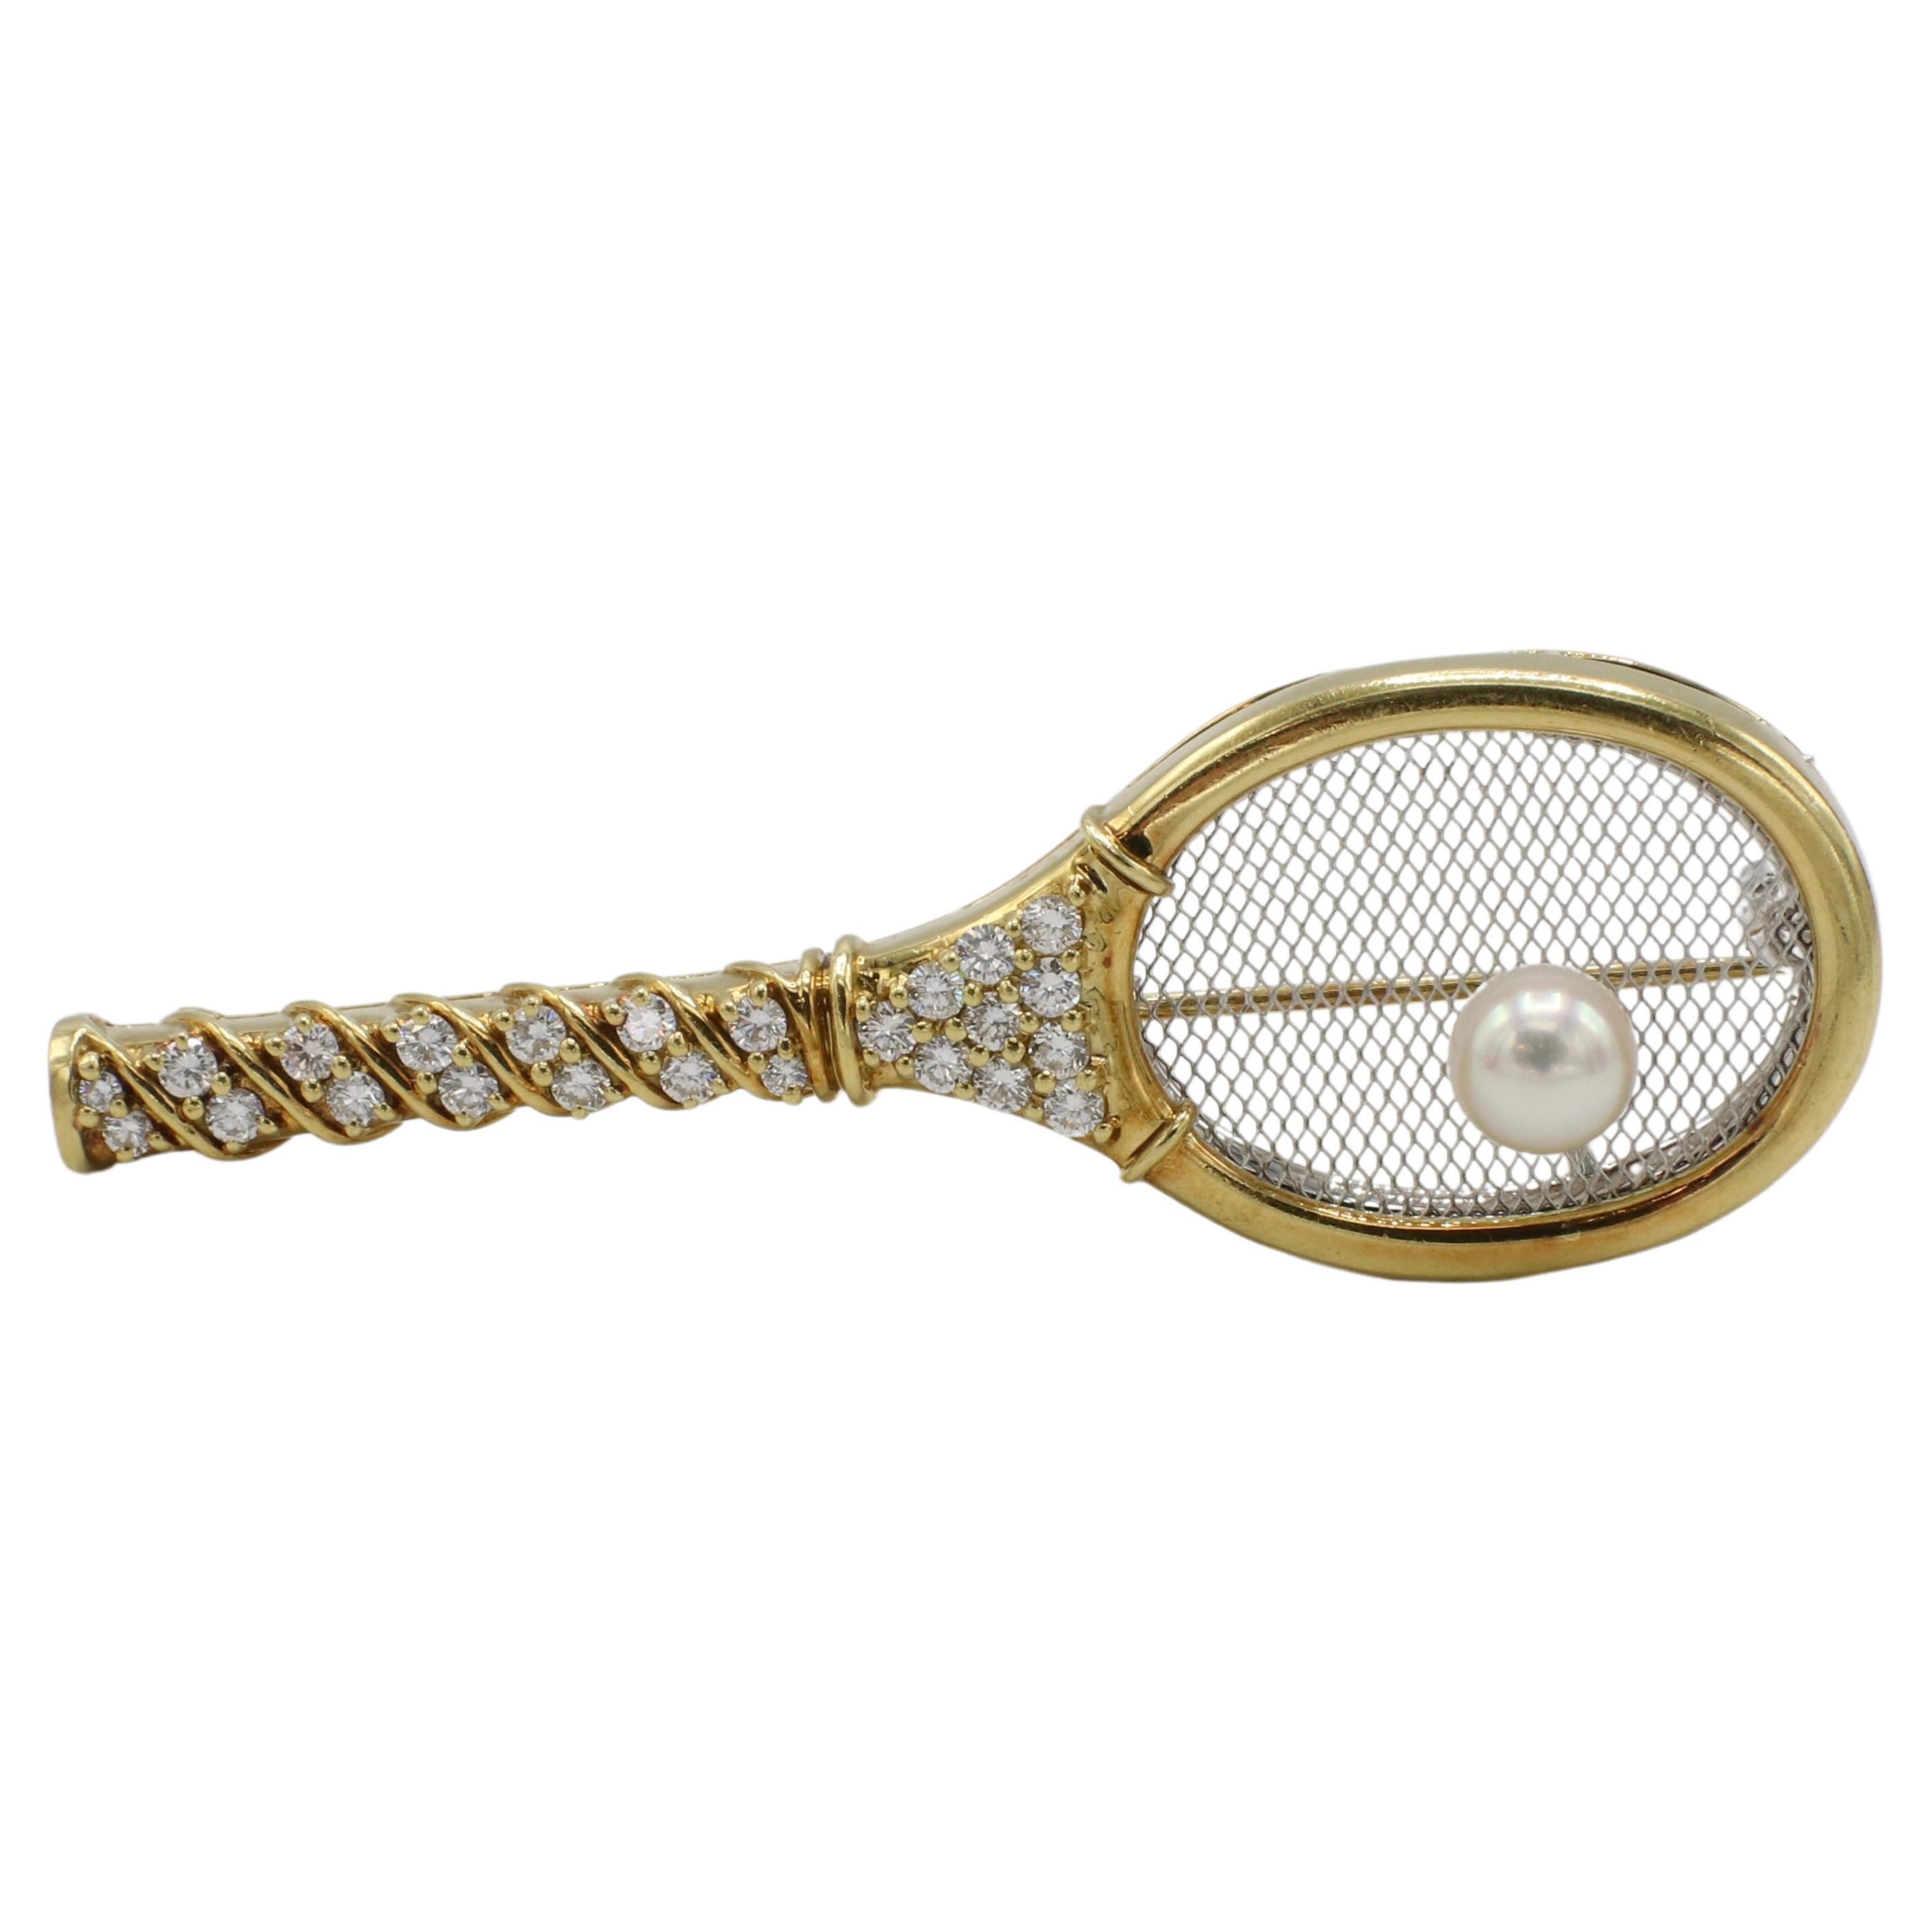 Kurt Gaum 18 Karat Yellow Gold Natural Diamond & Pearl Tennis Racket Pin
Metal: 18k gold and platinum 
Weight: 15.81 grams
Diamonds: Approx. .75 CTW round natural diamonds F-G VS
Dimensions: 62 x 21mm
Pearl: 6.5mm
